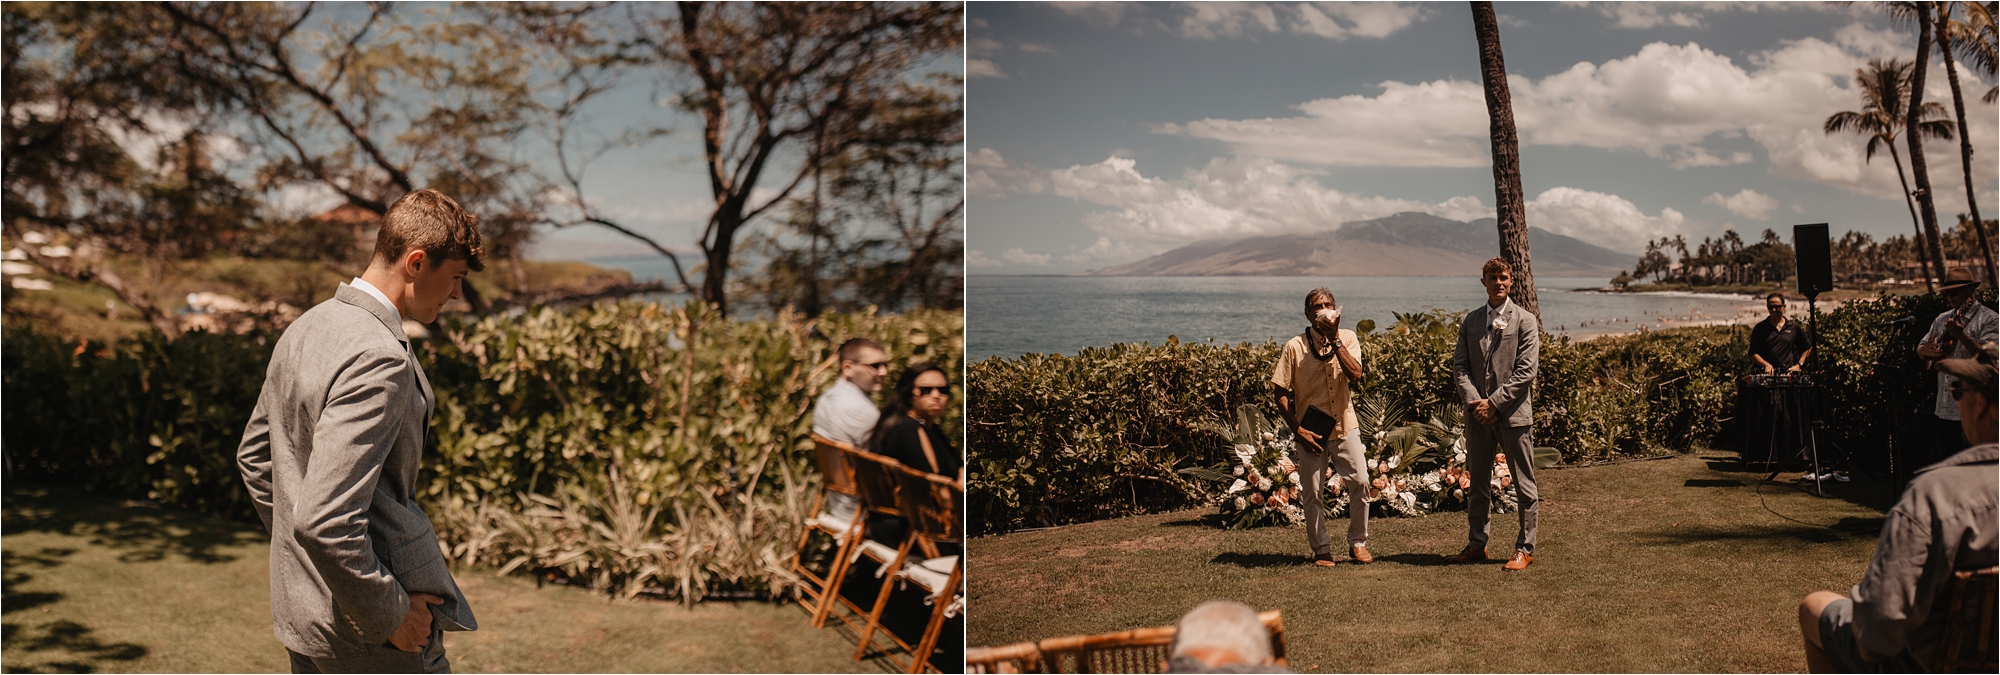 maui-hawaii-intimate-tropical-wedding_0025.jpg